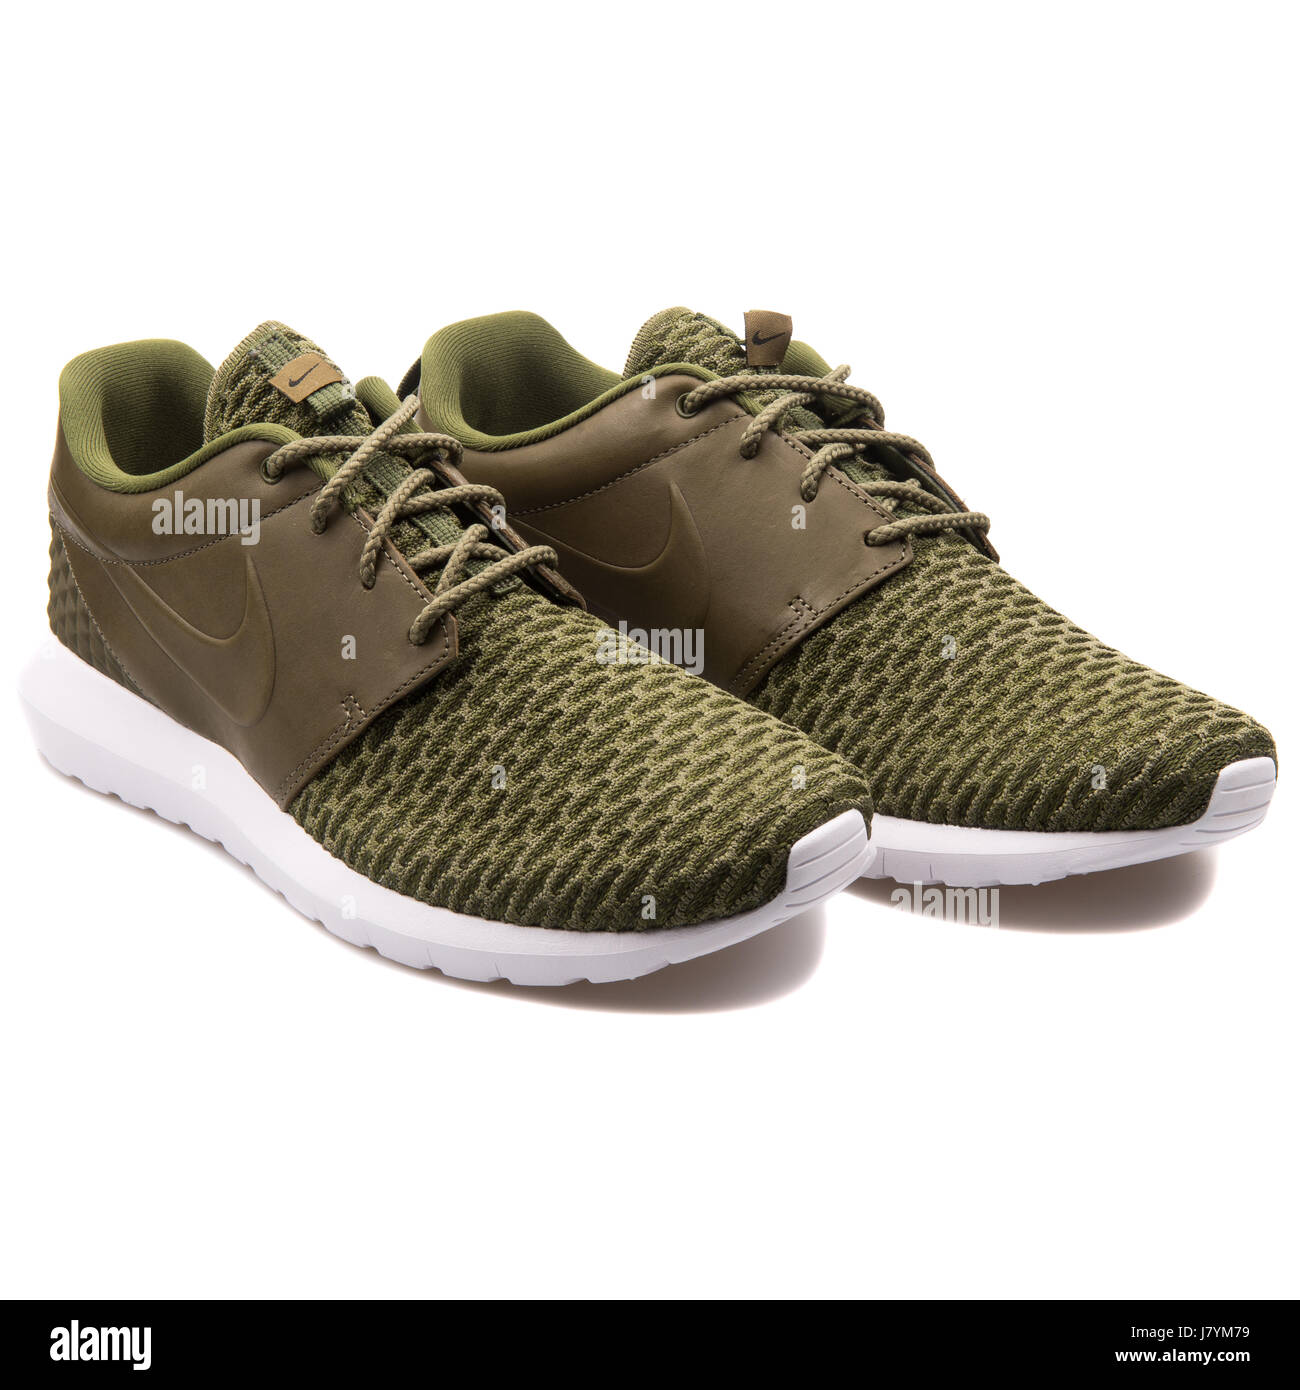 Nike Roshe NM Flyknit PRM grün Herren Sneakers - 746825-300 Stockfotografie - Alamy